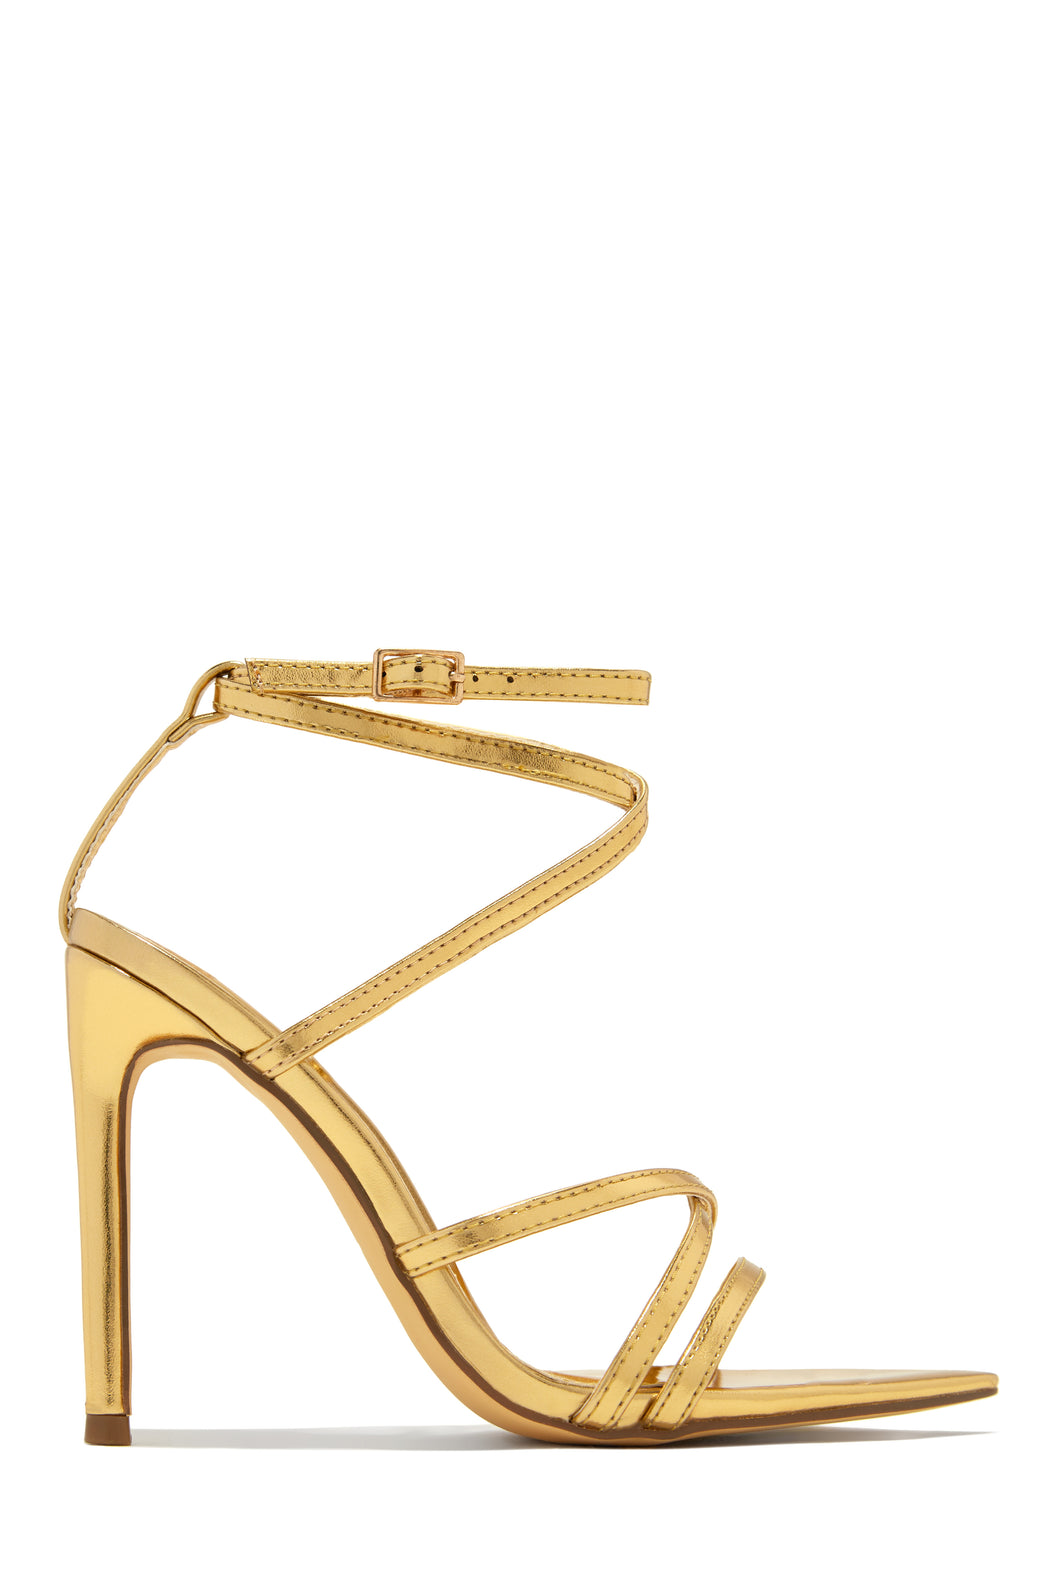 Flower Open Toe Rhinestone Strappy Stiletto High Heel Sandal Shoe (Gold,  8.5 B(M) US) - Walmart.com